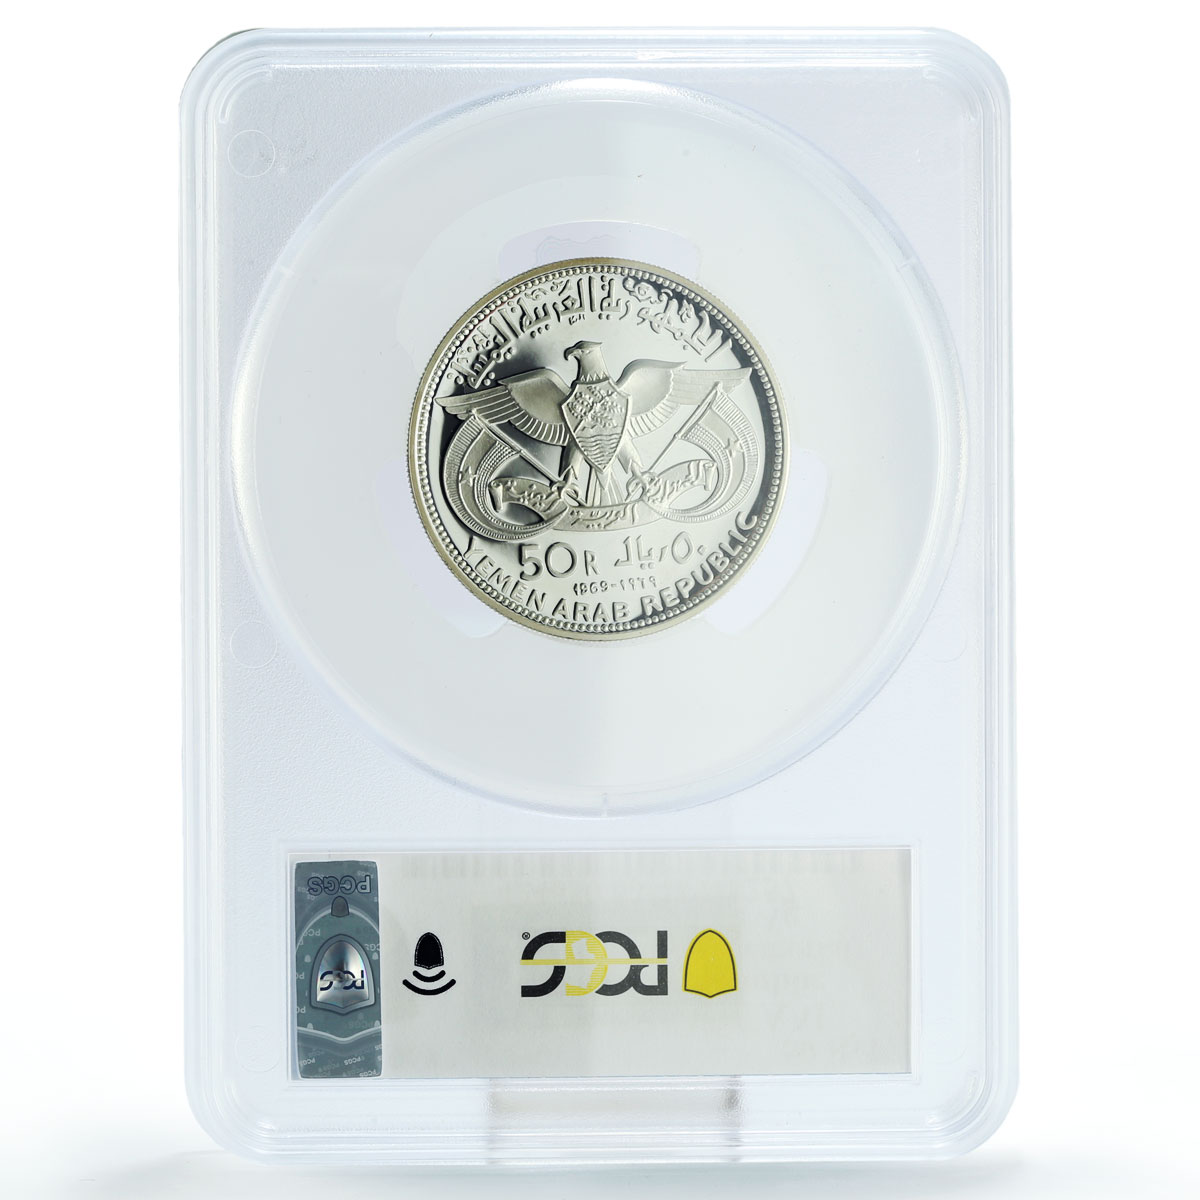 Yemen 50 riyals Azzubairi Memorial Lion Restrike PR63 PCGS silver coin 1990